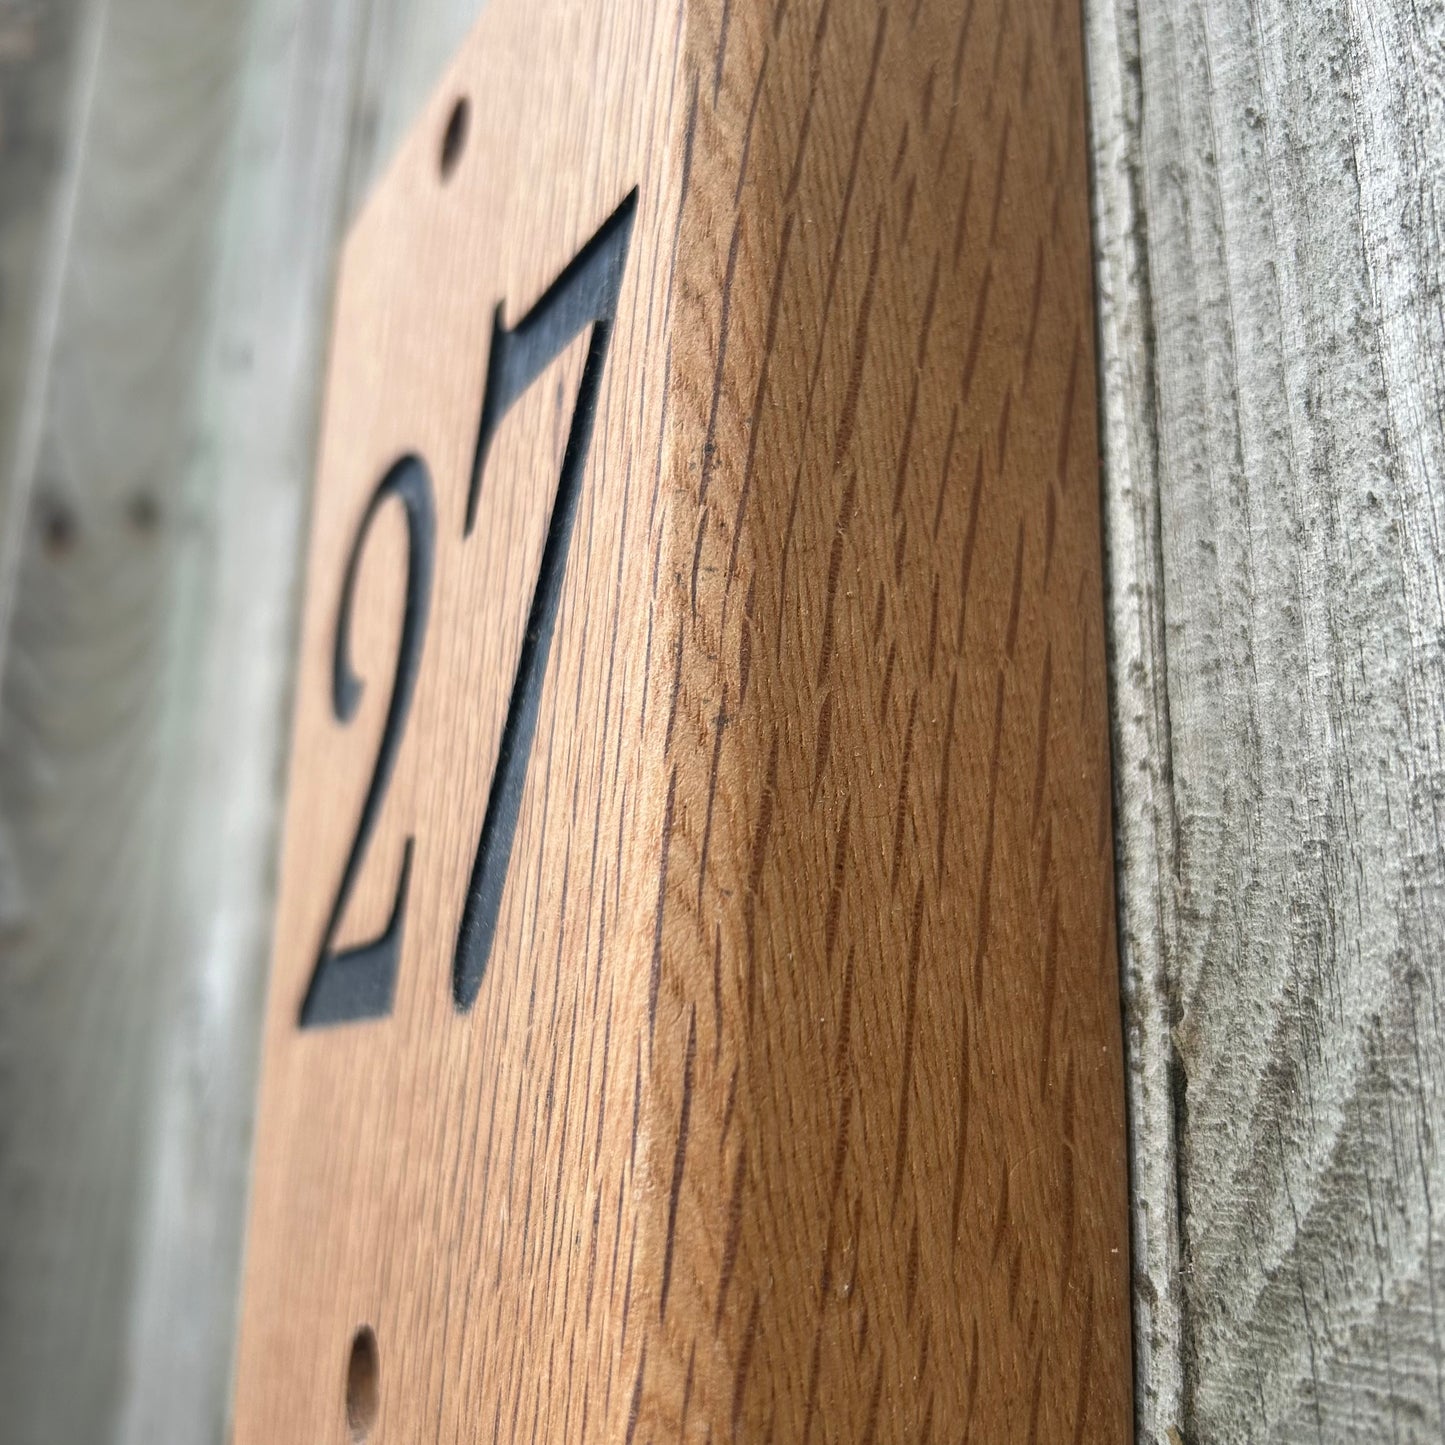 Engraved wooden number plaque